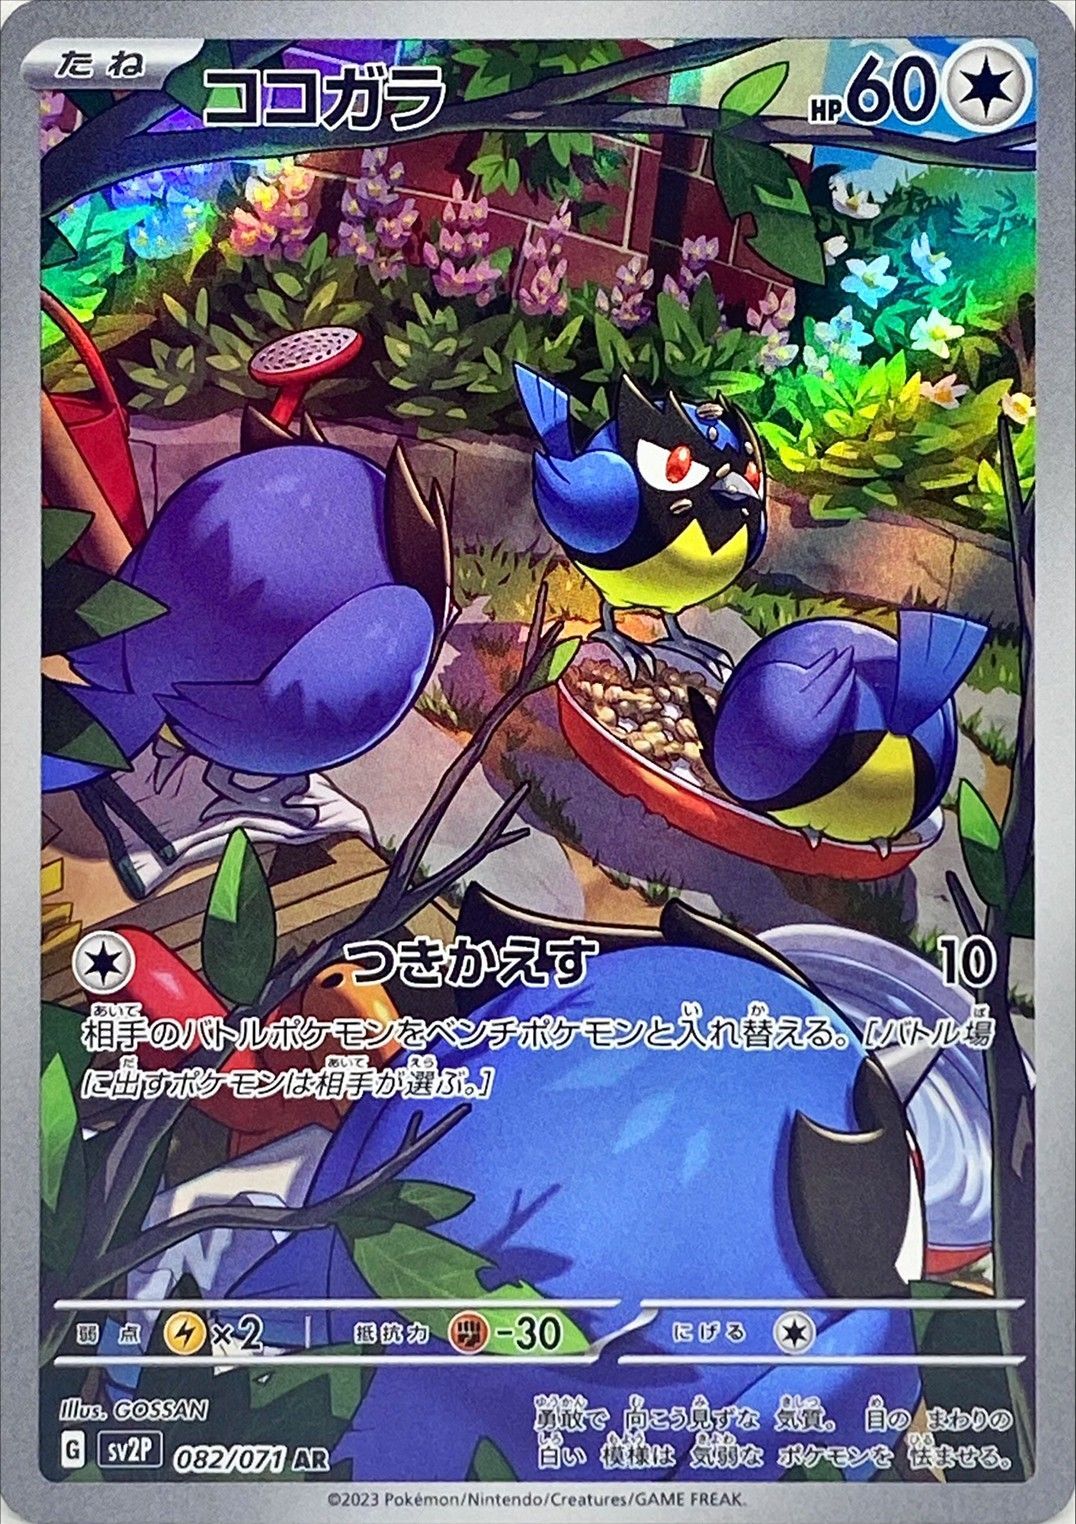 Pokemon Trading Card Game S8b 195/184 CHR Zekrom (Rank A)